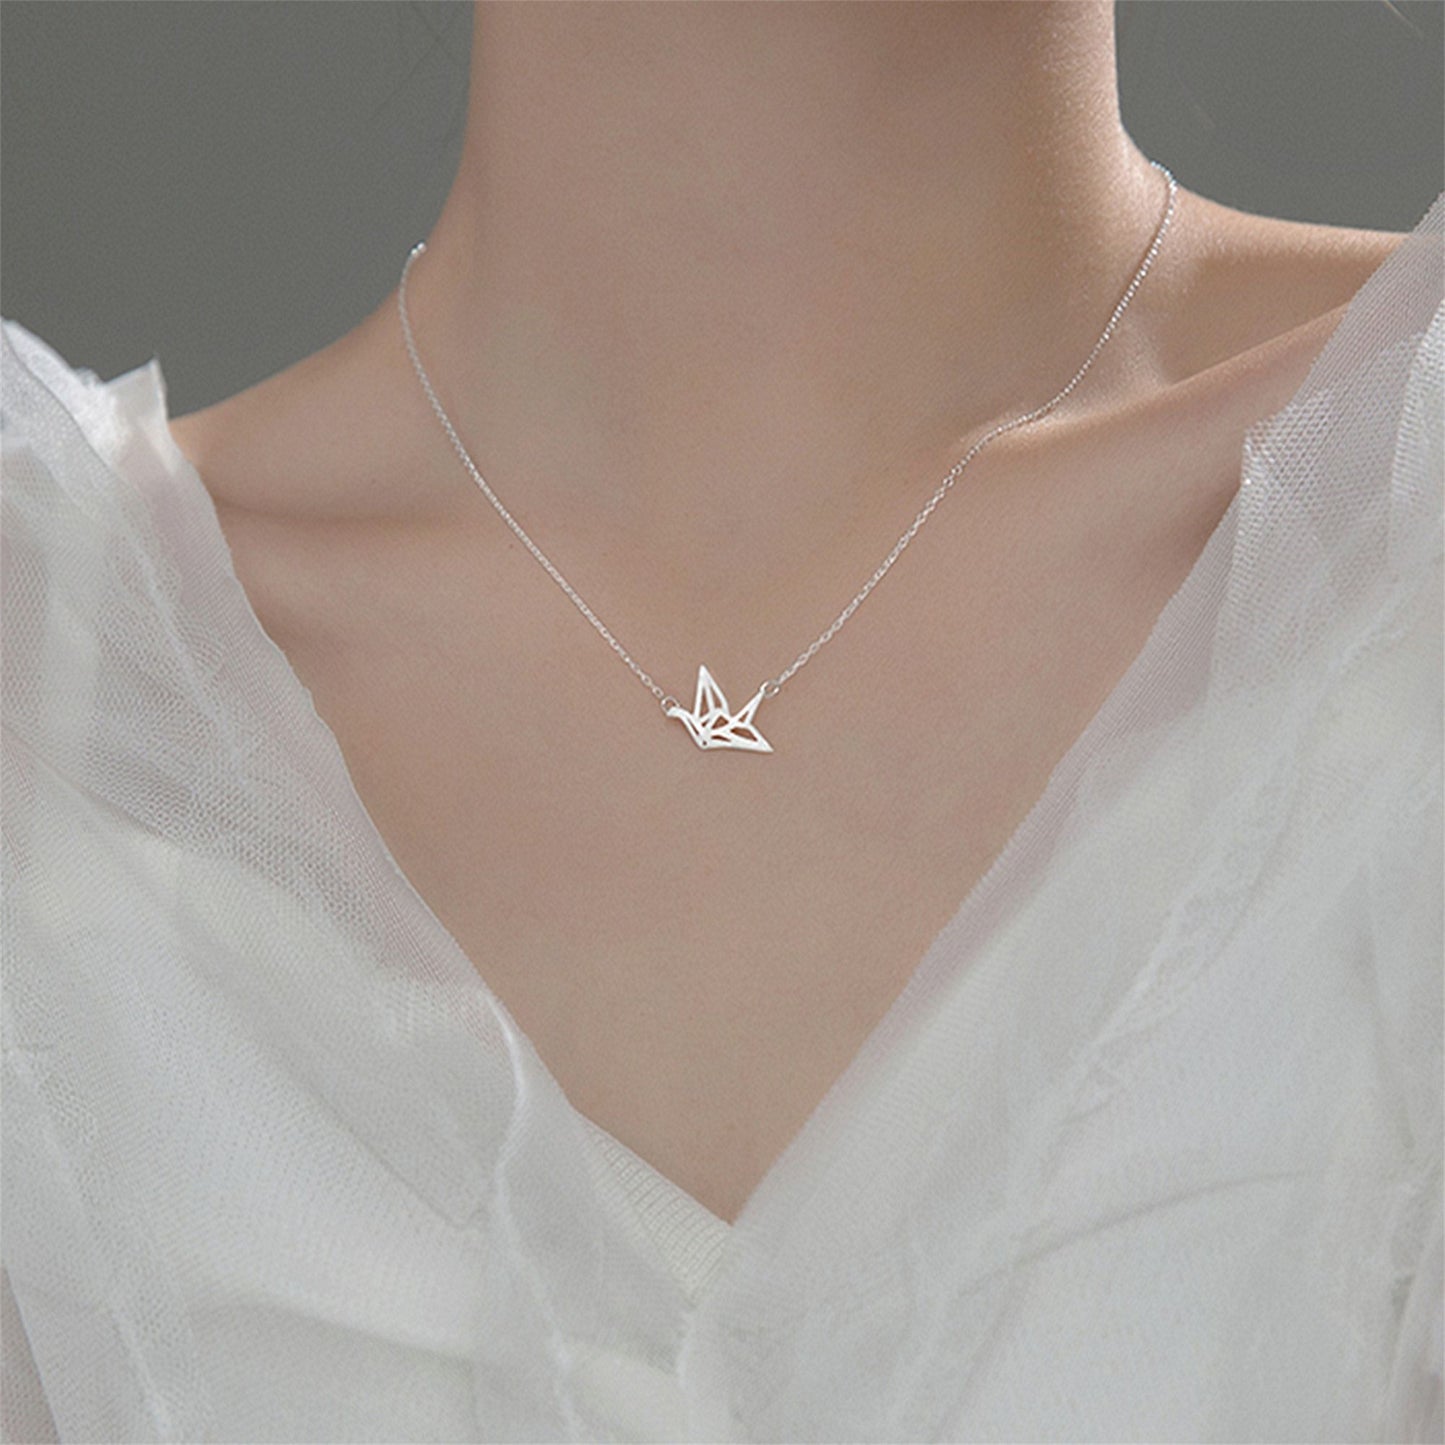 Sterling silver origami crane necklace with silver chain - sugarkittenlondon